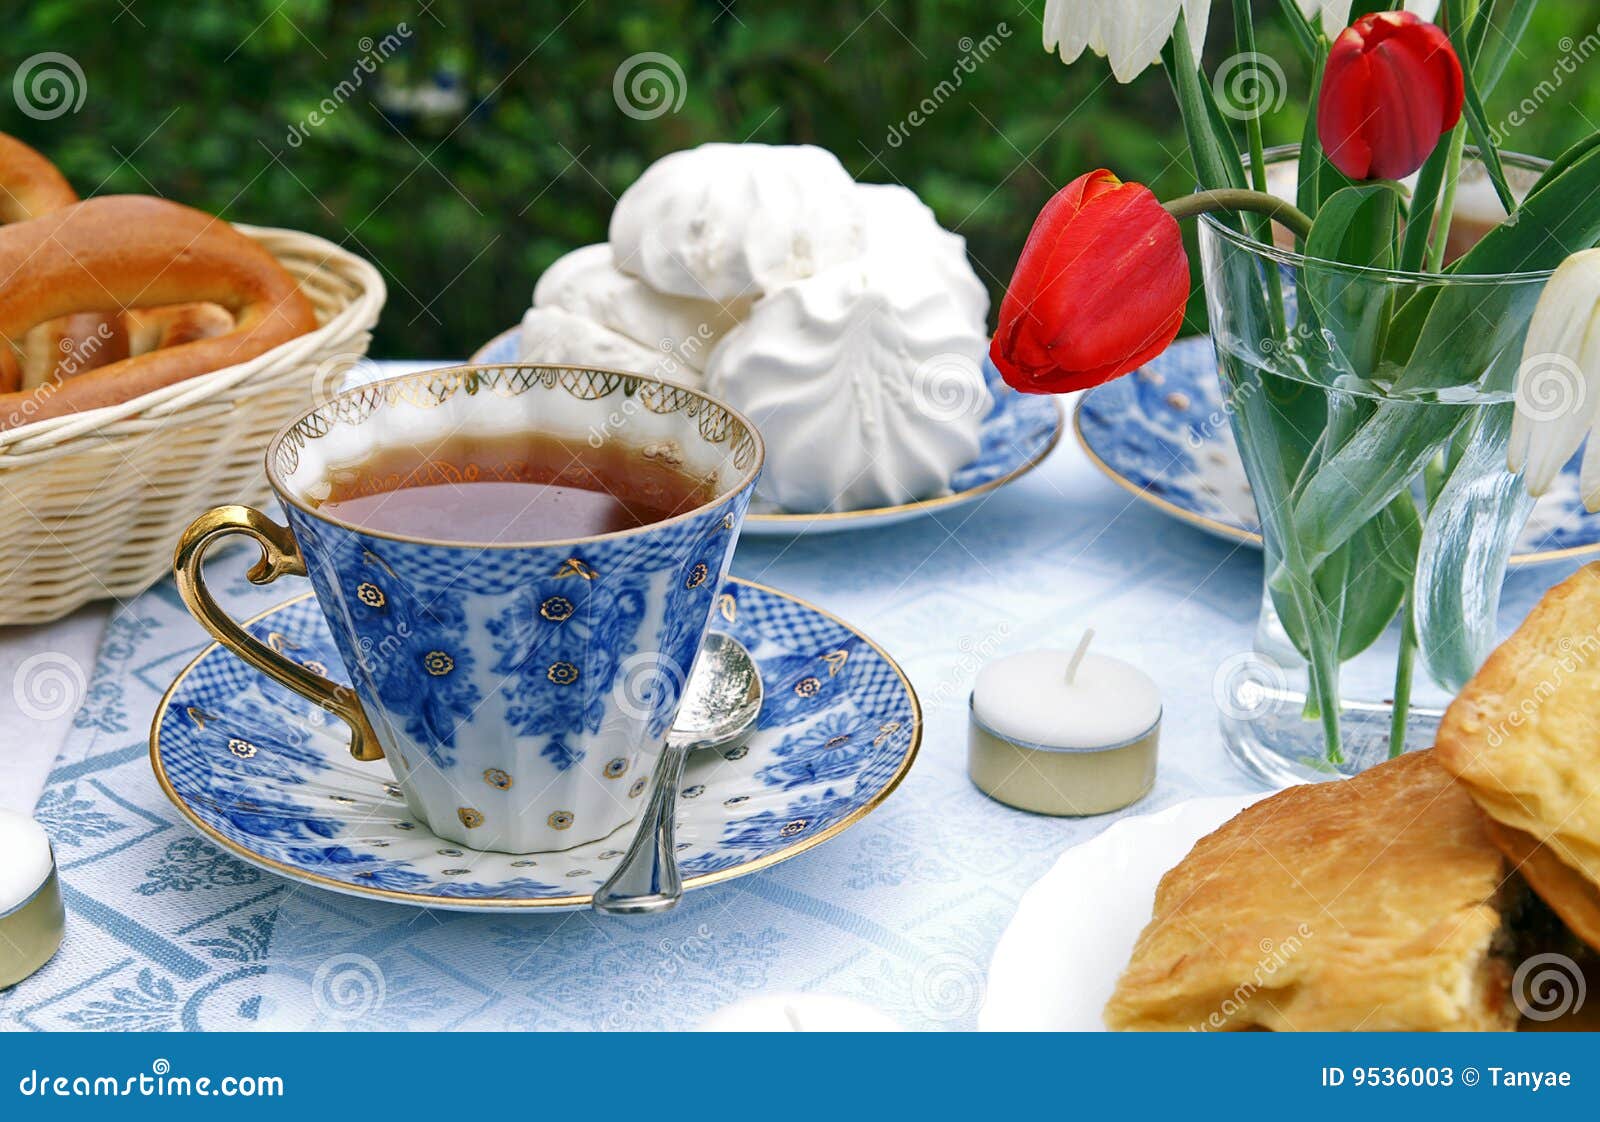 summer afternoon tea-table